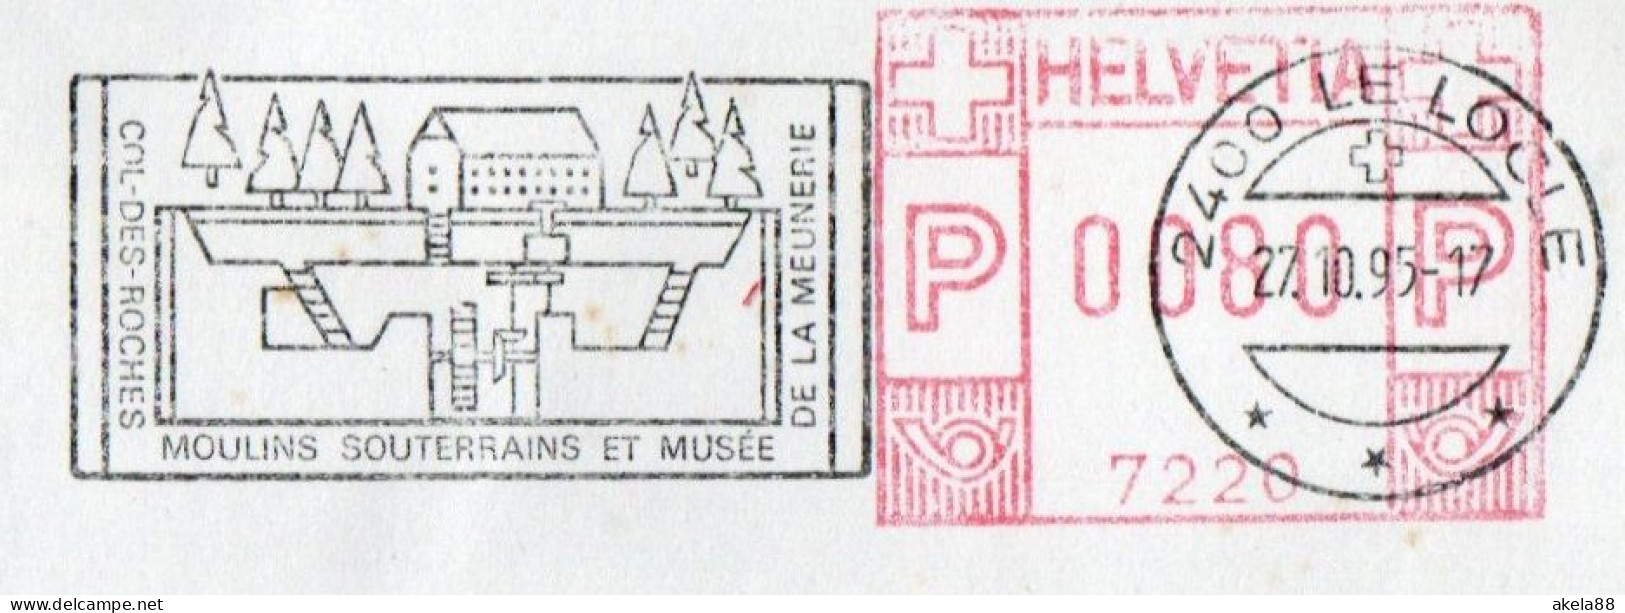 SVIZZERA  1995 - AFFRANCATURA ATM - LE LOCLE - MULINI SOTTERANEI - Postage Meters